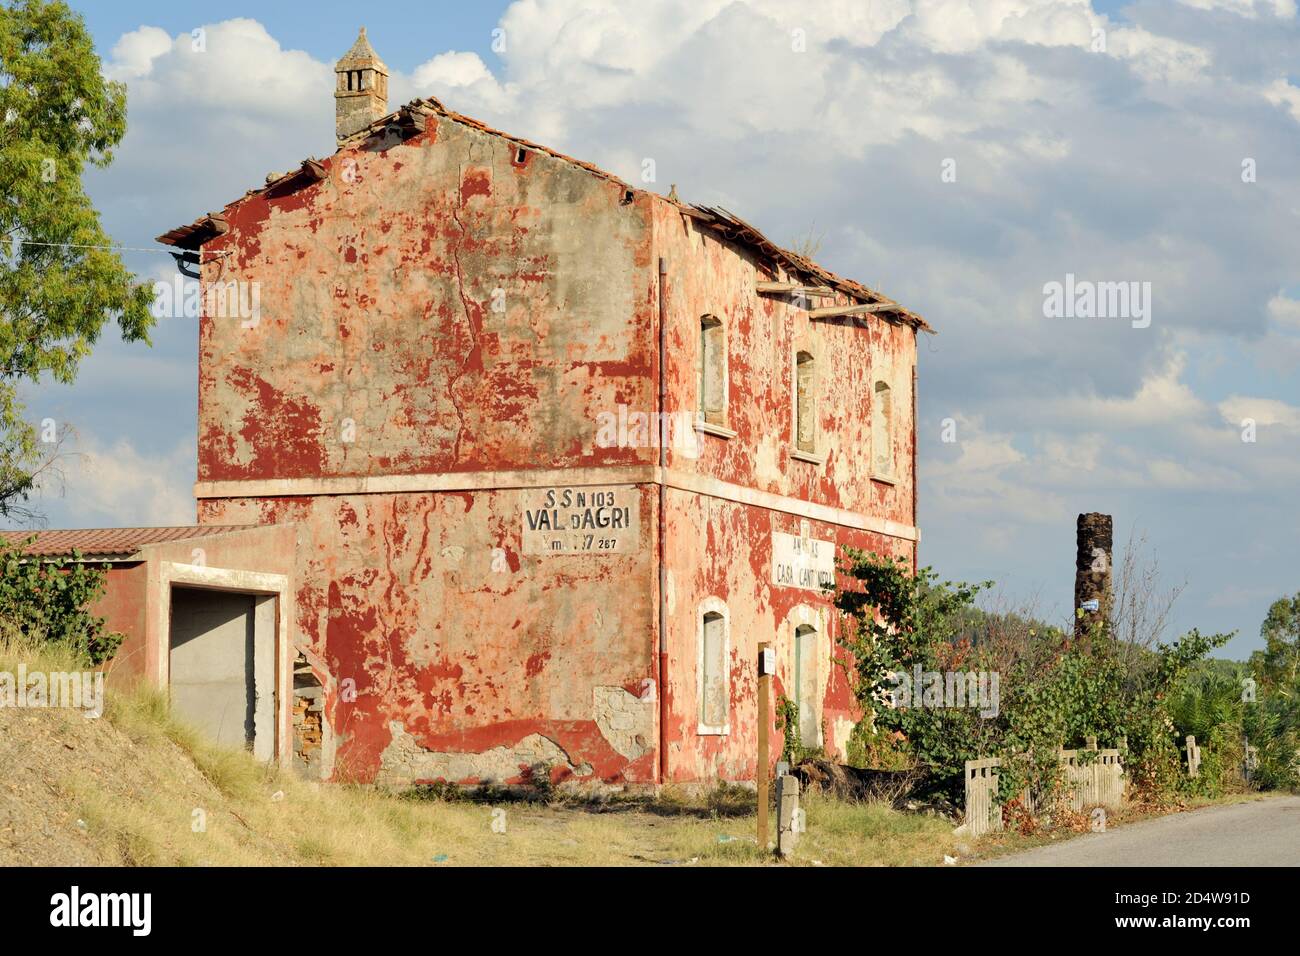 italia, basilicata, carretera estatal 103, casa cantoniera, casa rural abandonada Foto de stock